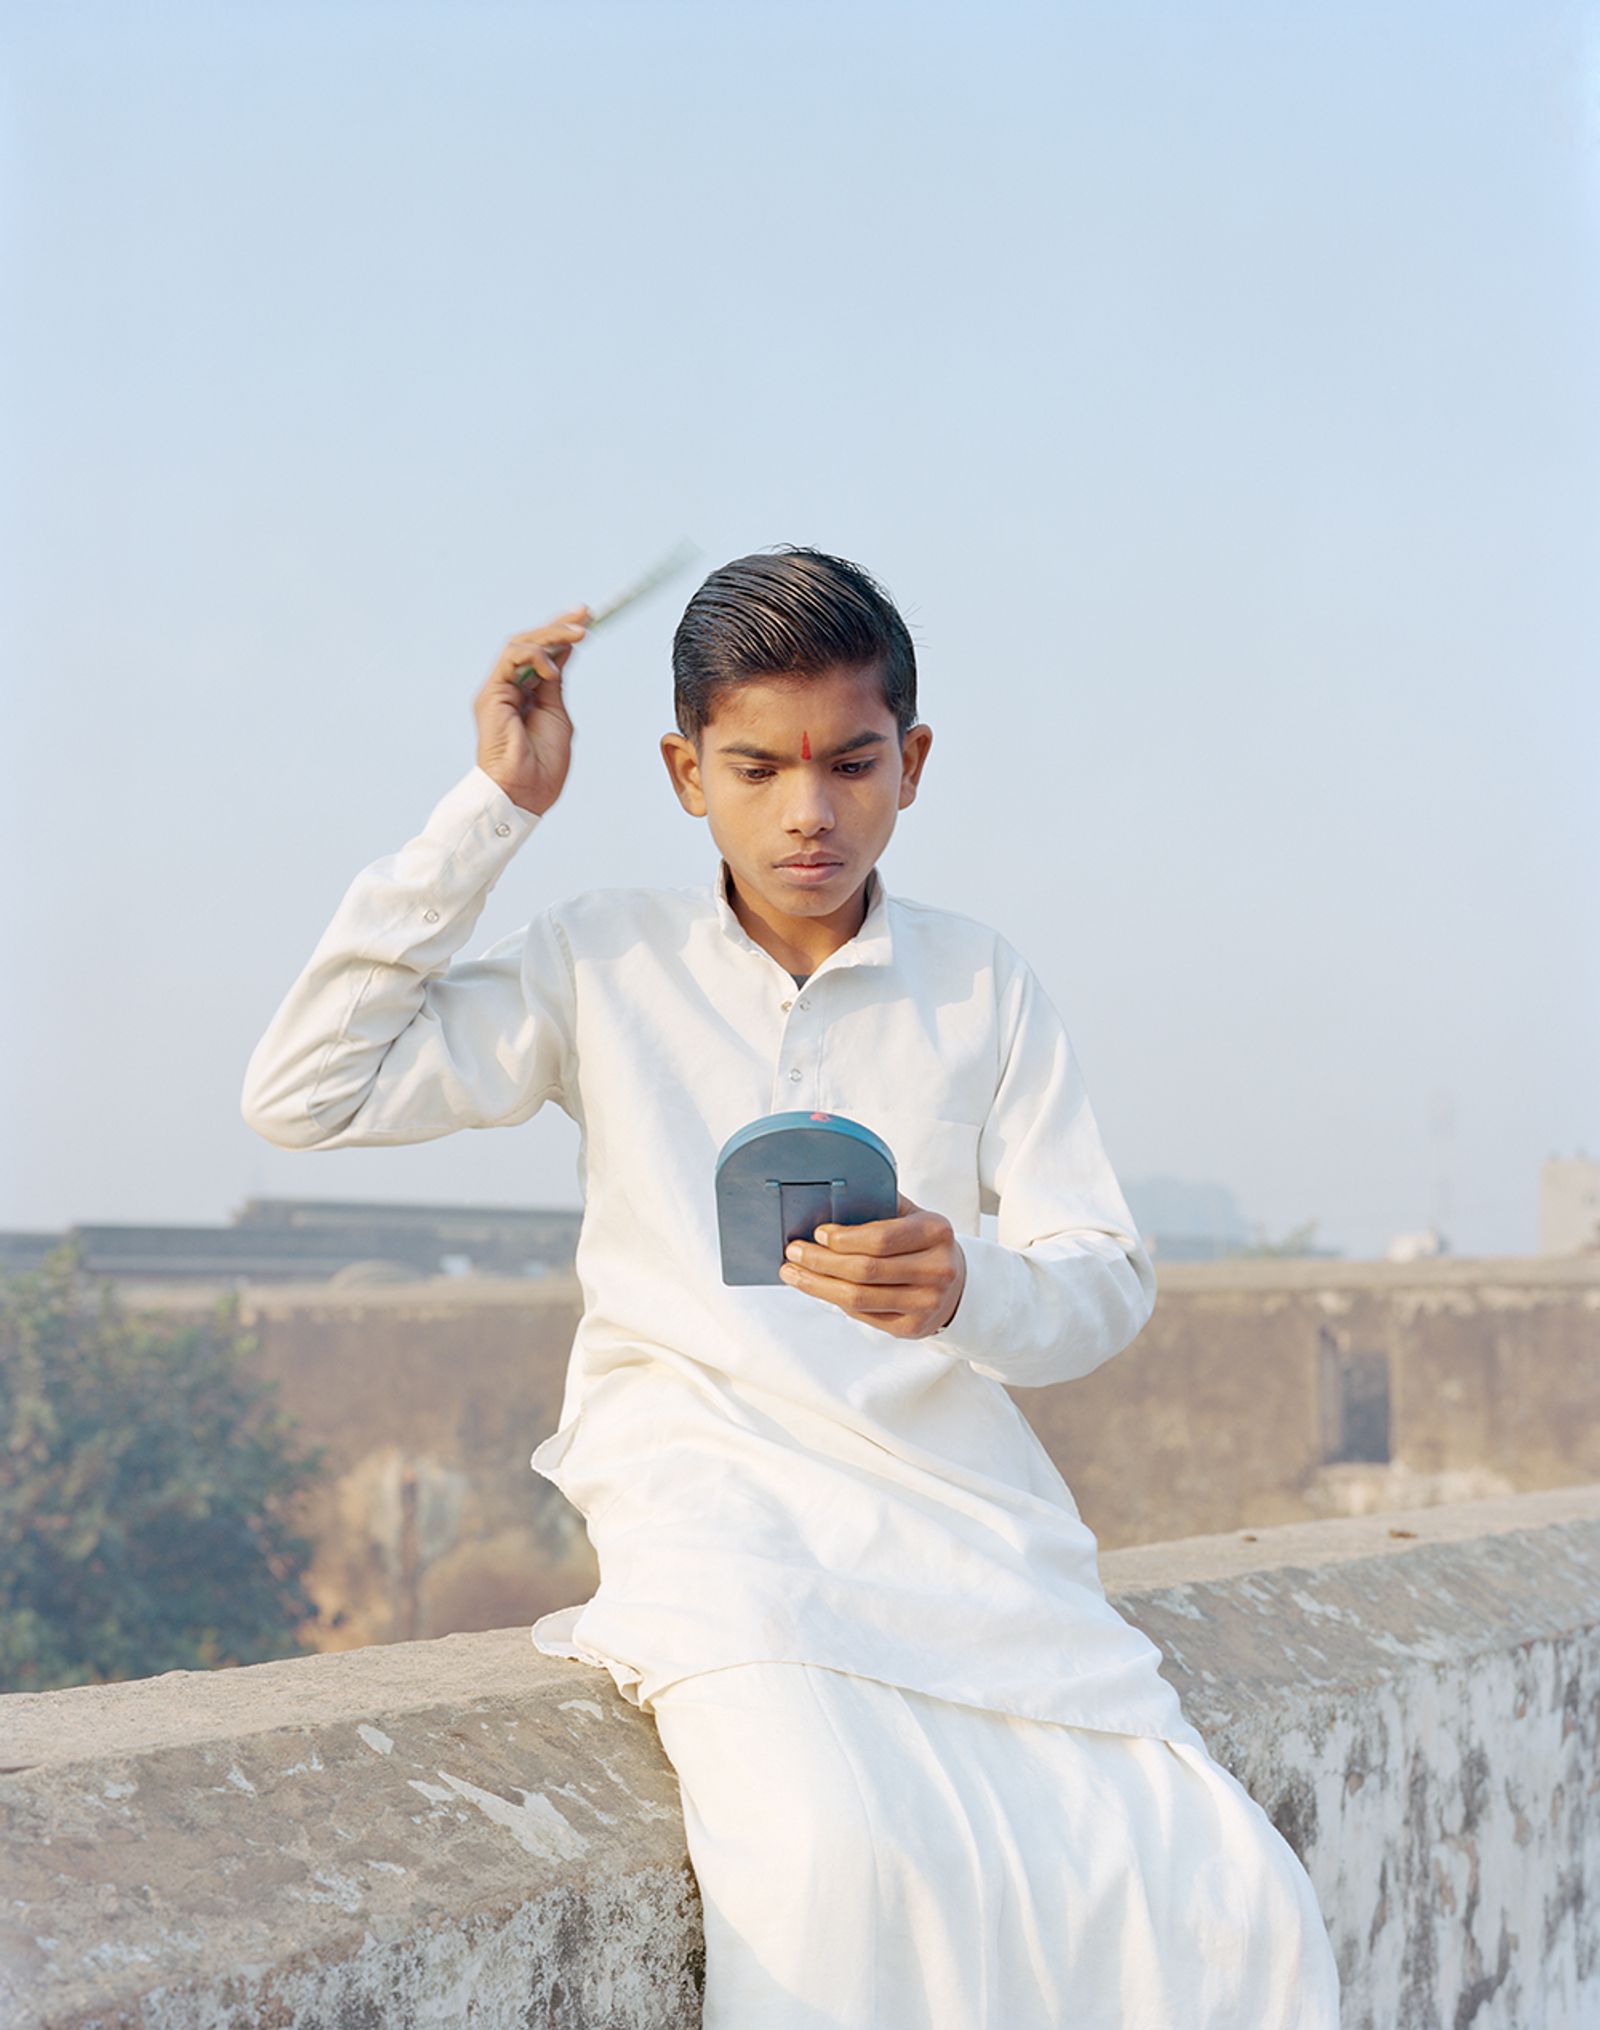 © Vasantha Yogananthan - Rama Combing His Hair, Ayodhya, Uttar Pradesh, India, 2015